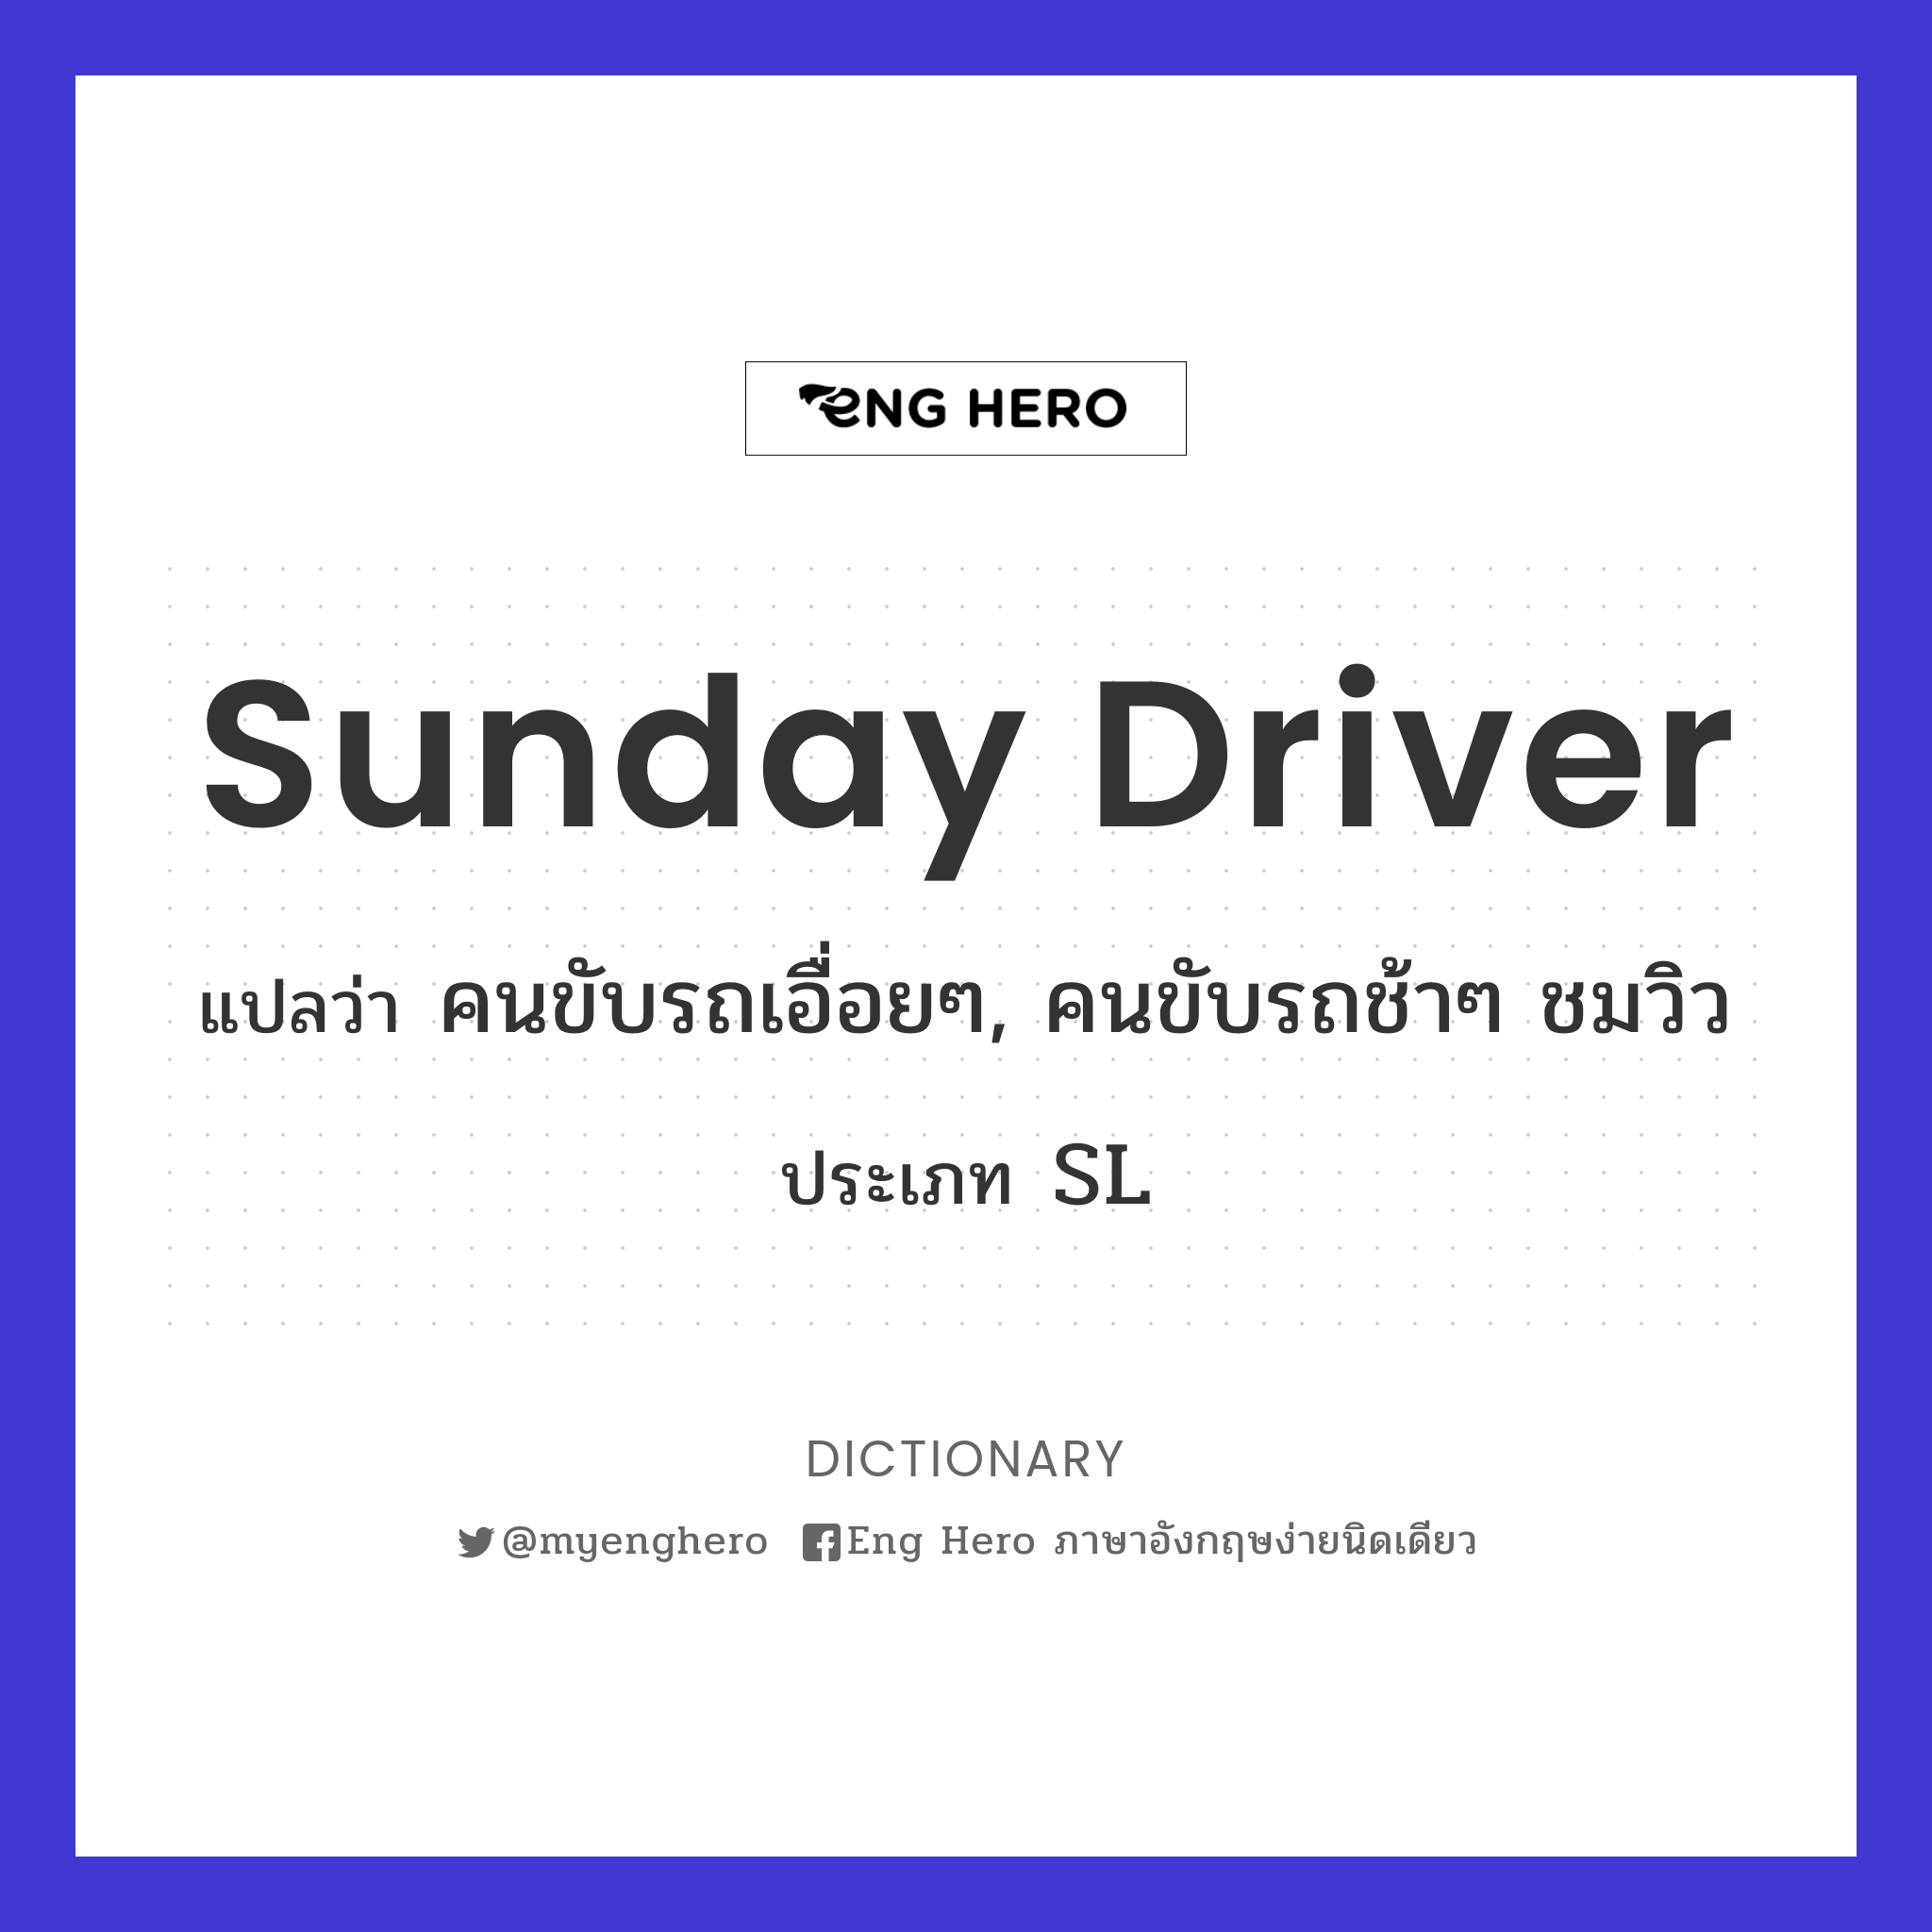 Sunday driver